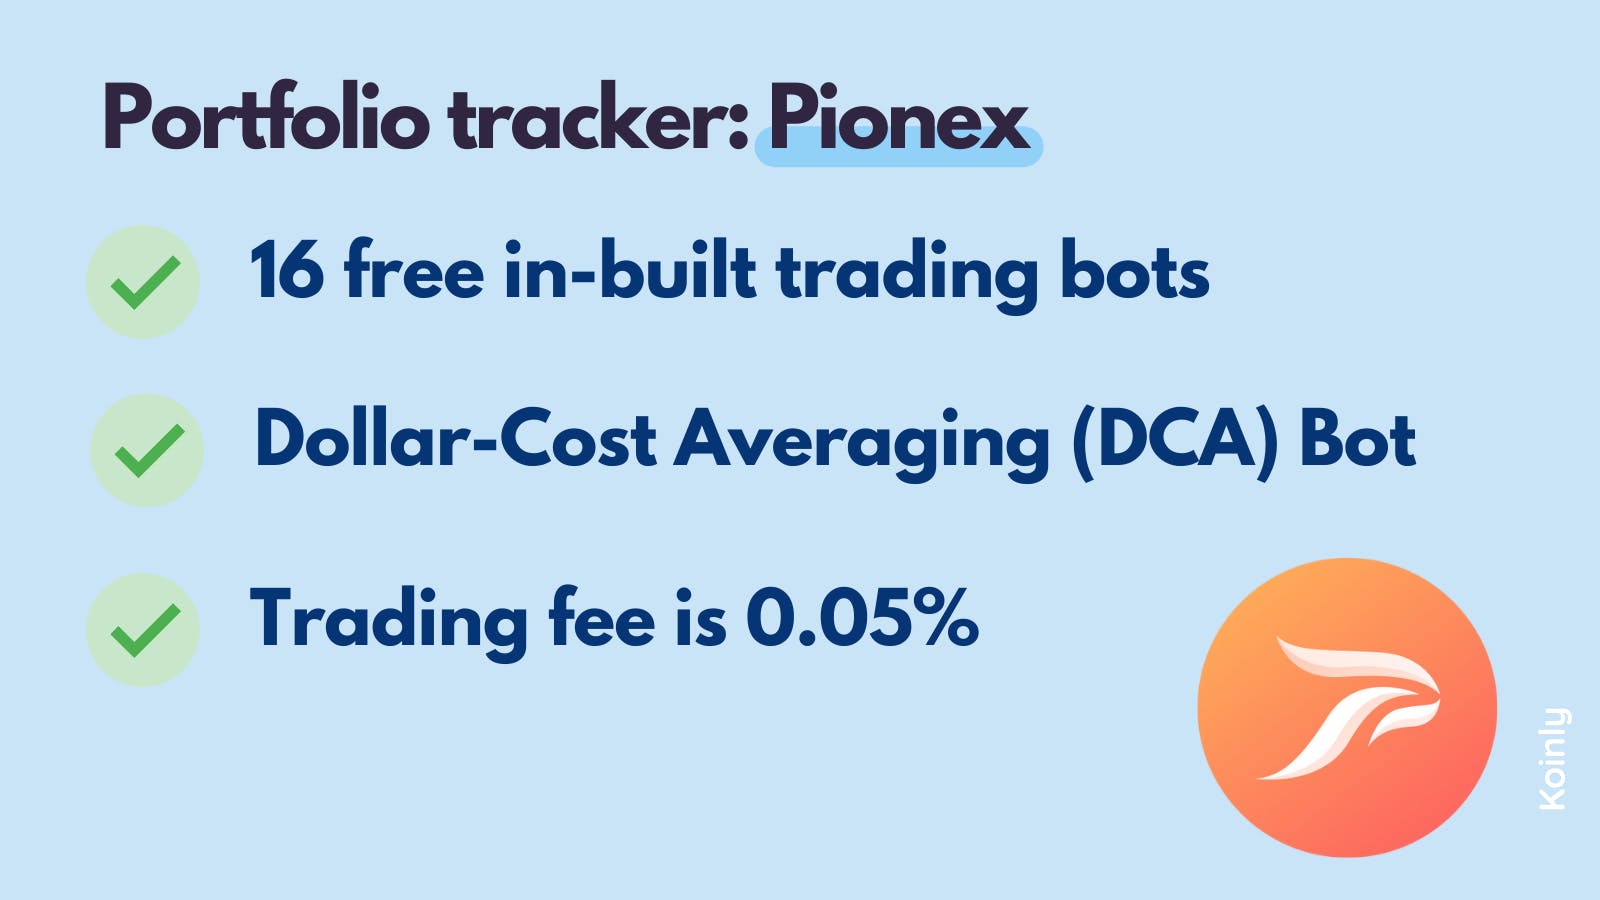 Pionex crypto portfolio tracker features